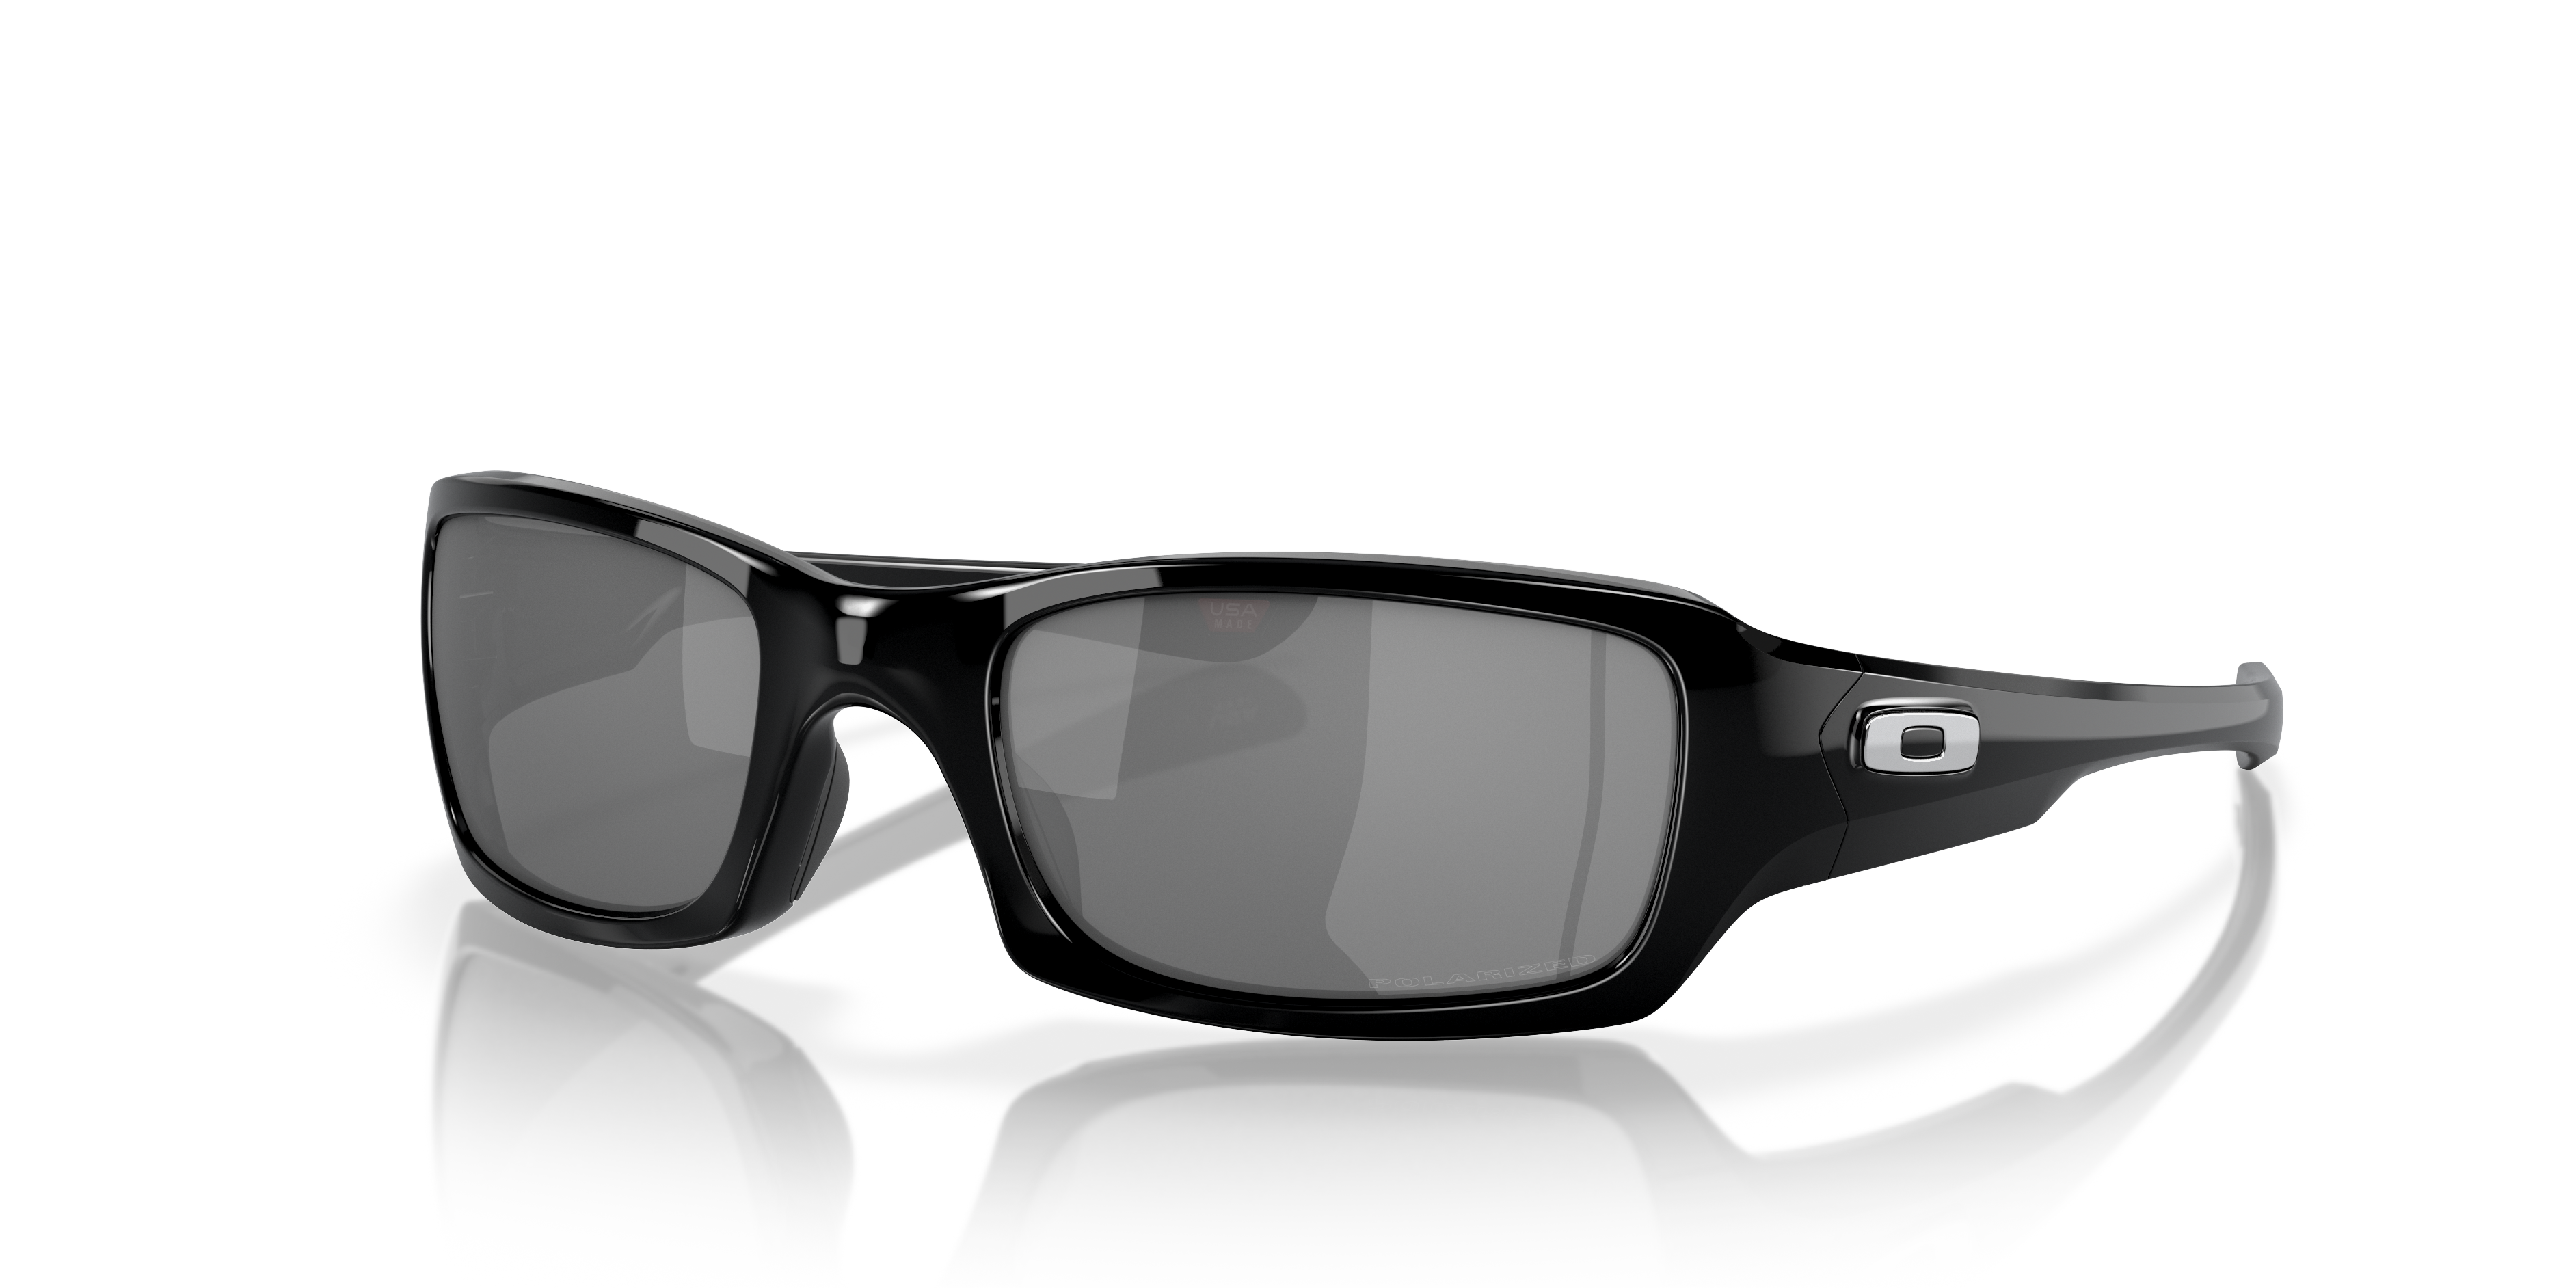 Oakley OO9406 Unisex-Adult Sunglasses - Gray for sale online | eBay